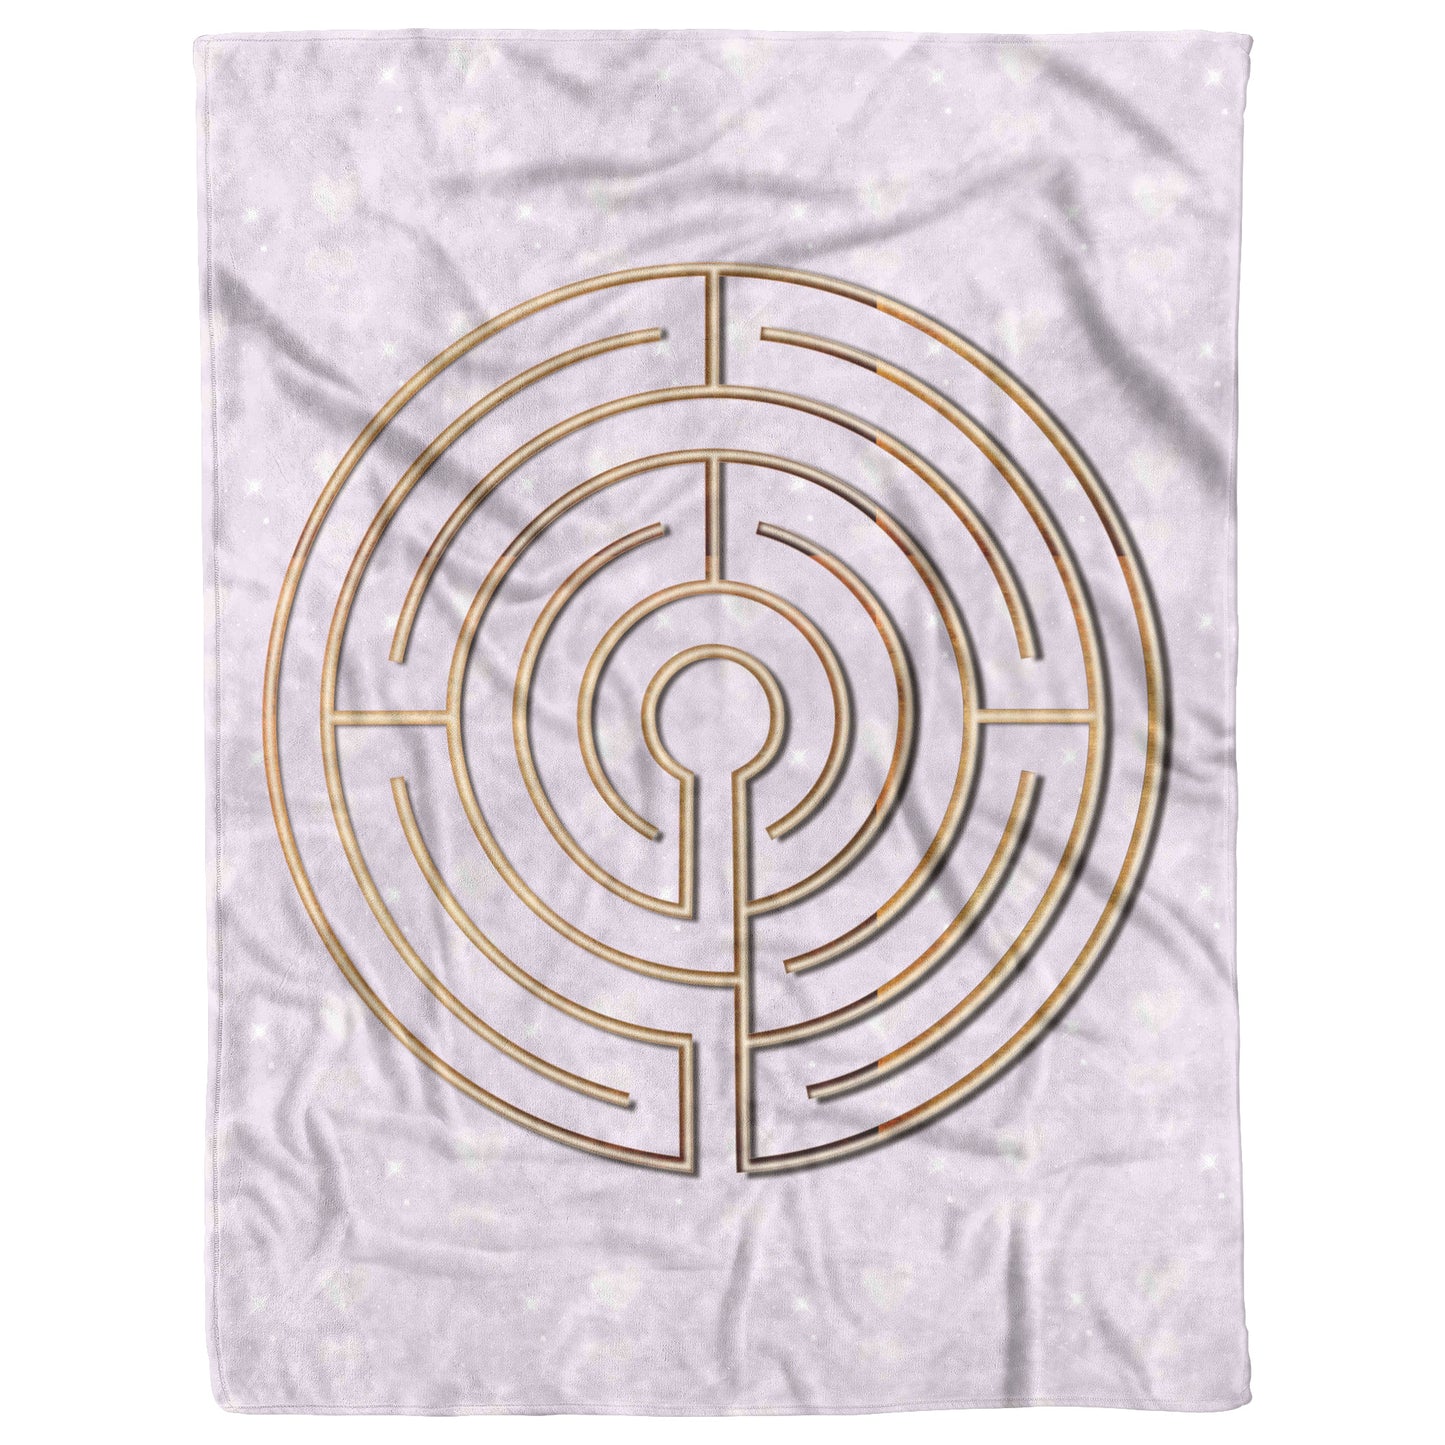 Abingdon Labyrinth Therapy Blanket - Lavendar